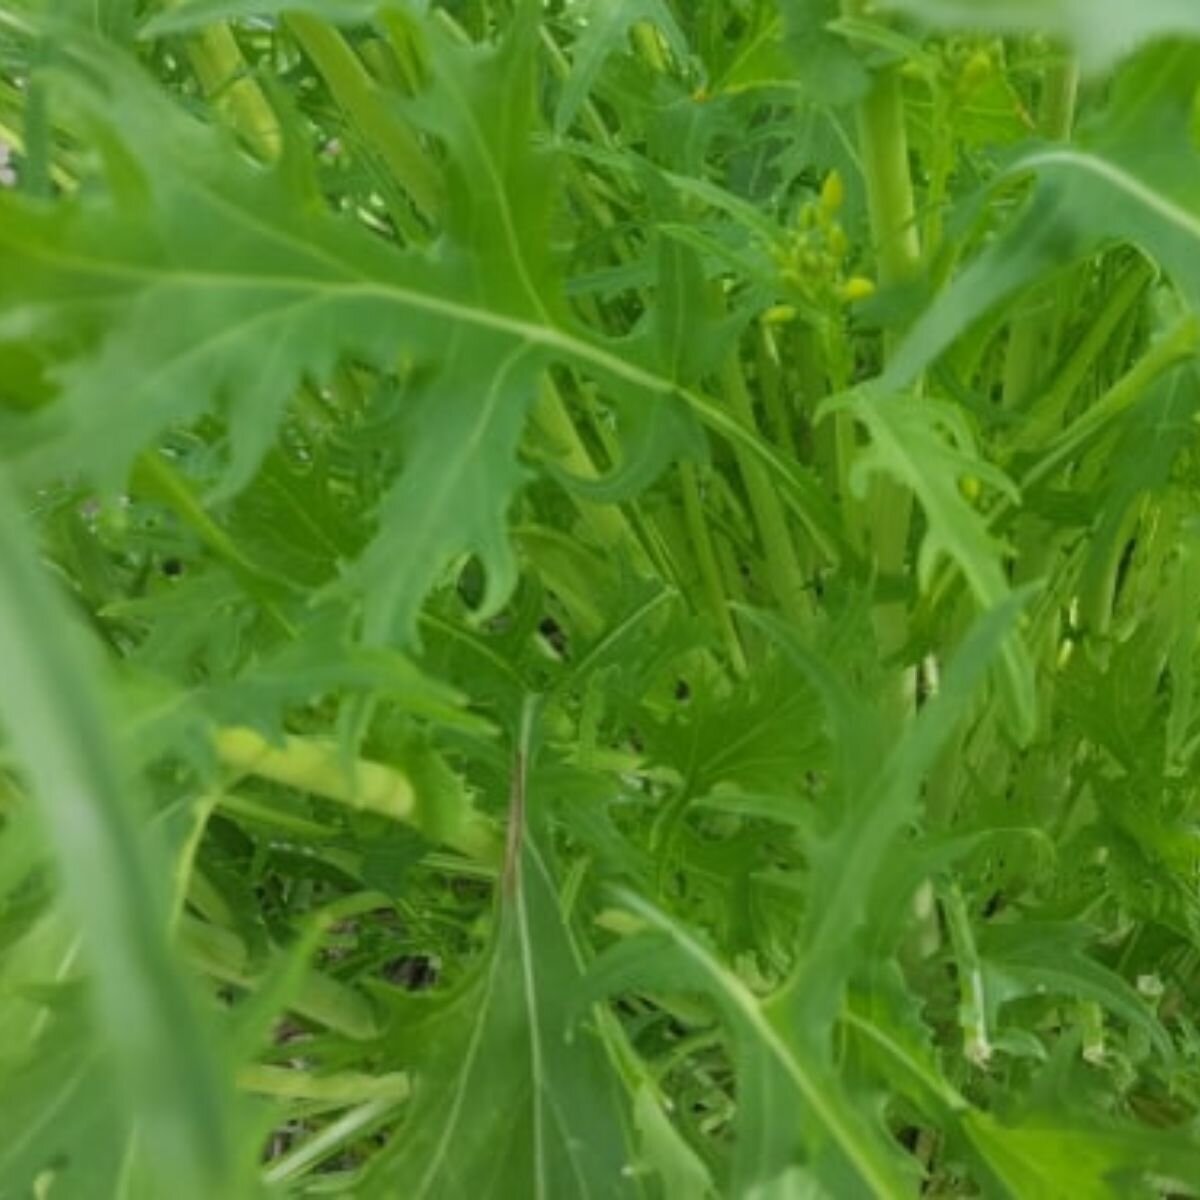 Mizuna - Green Seeds